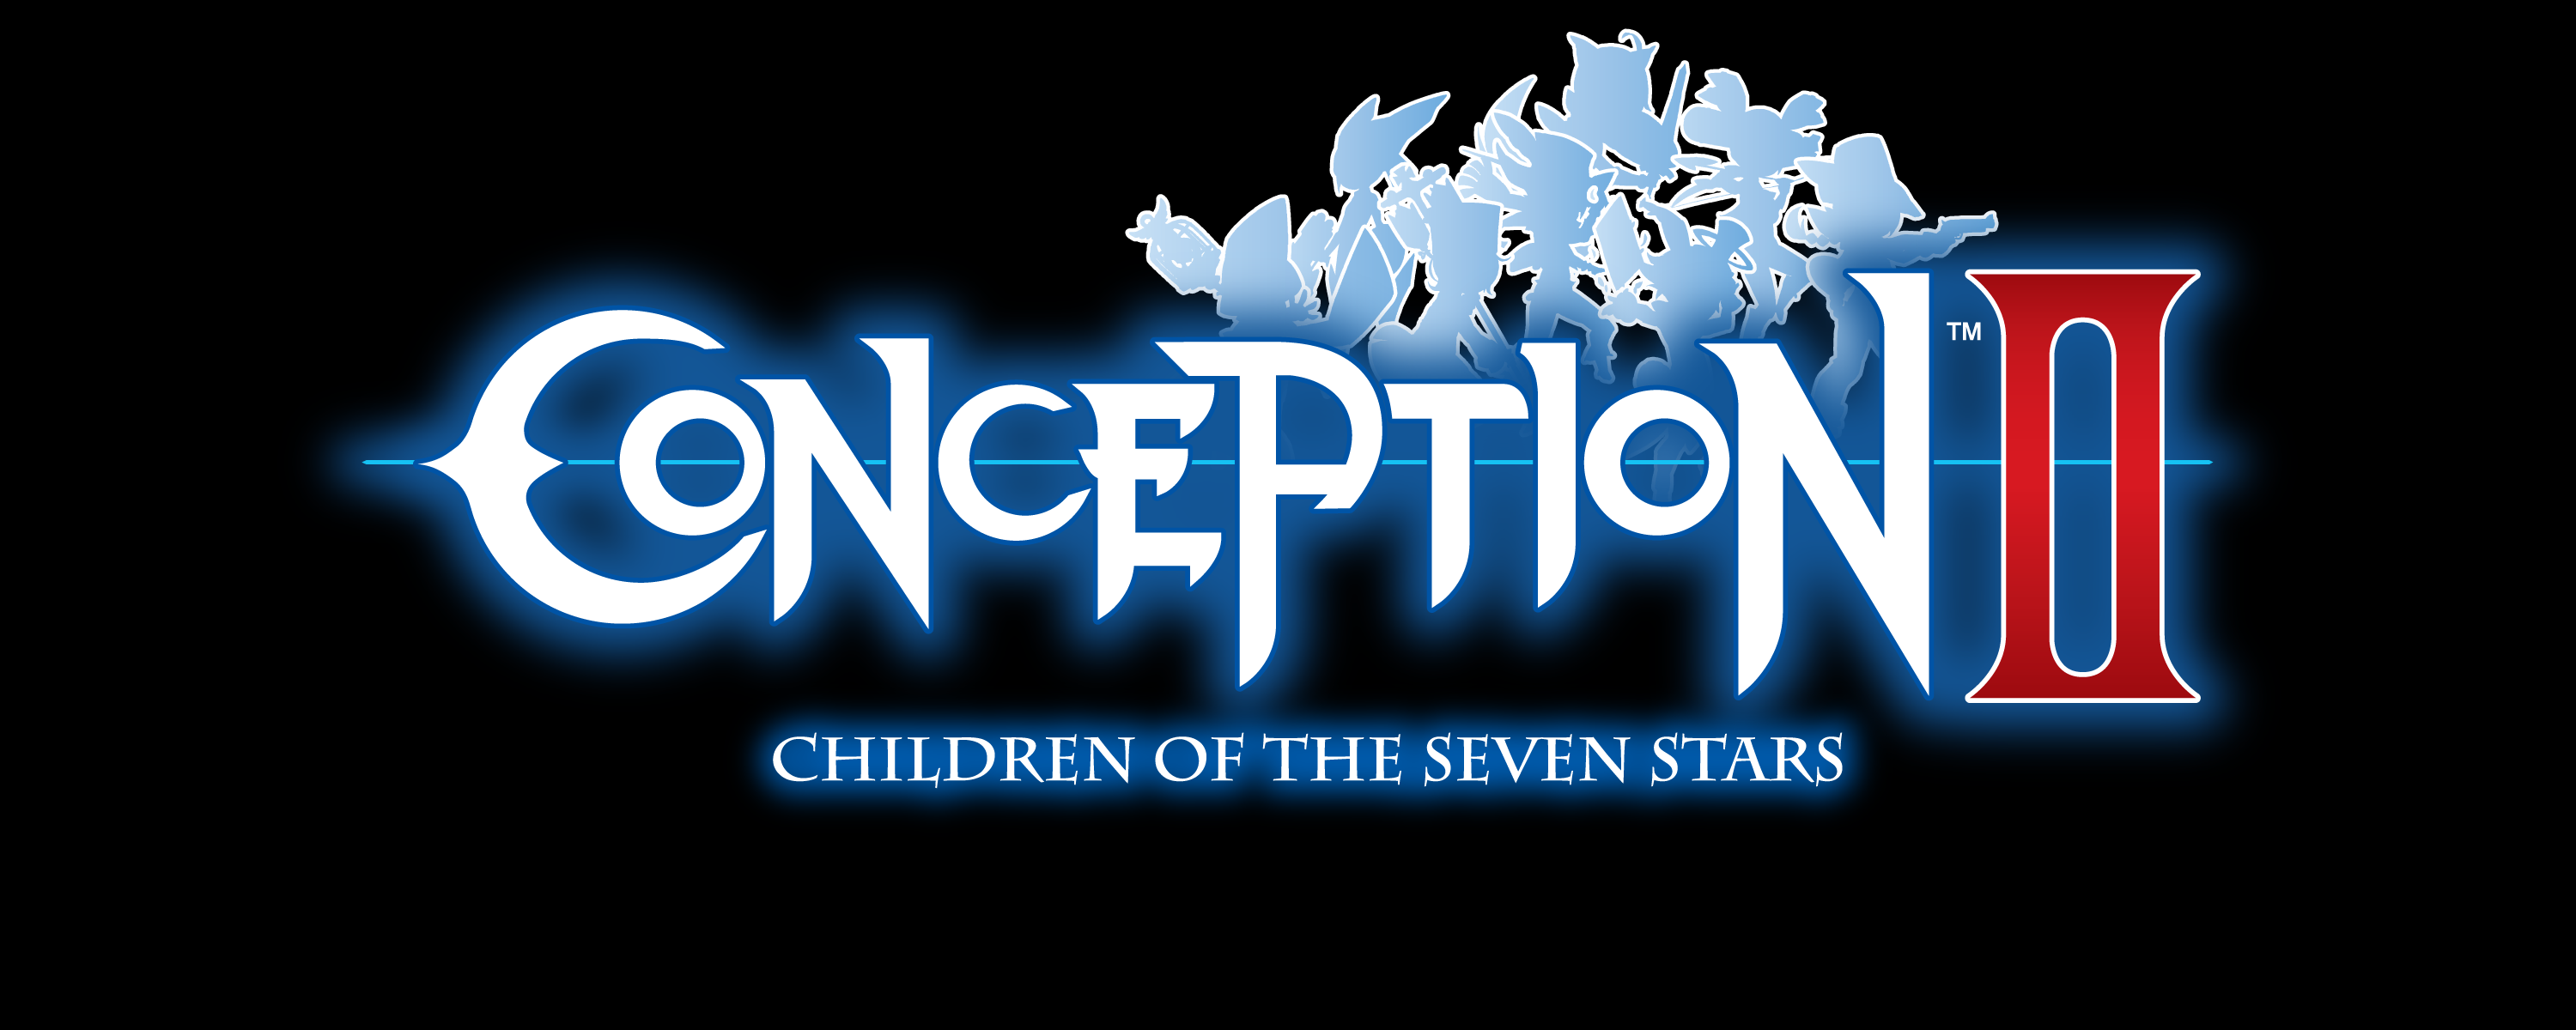 Conception II: Children of the Seven Stars Full Trailer 